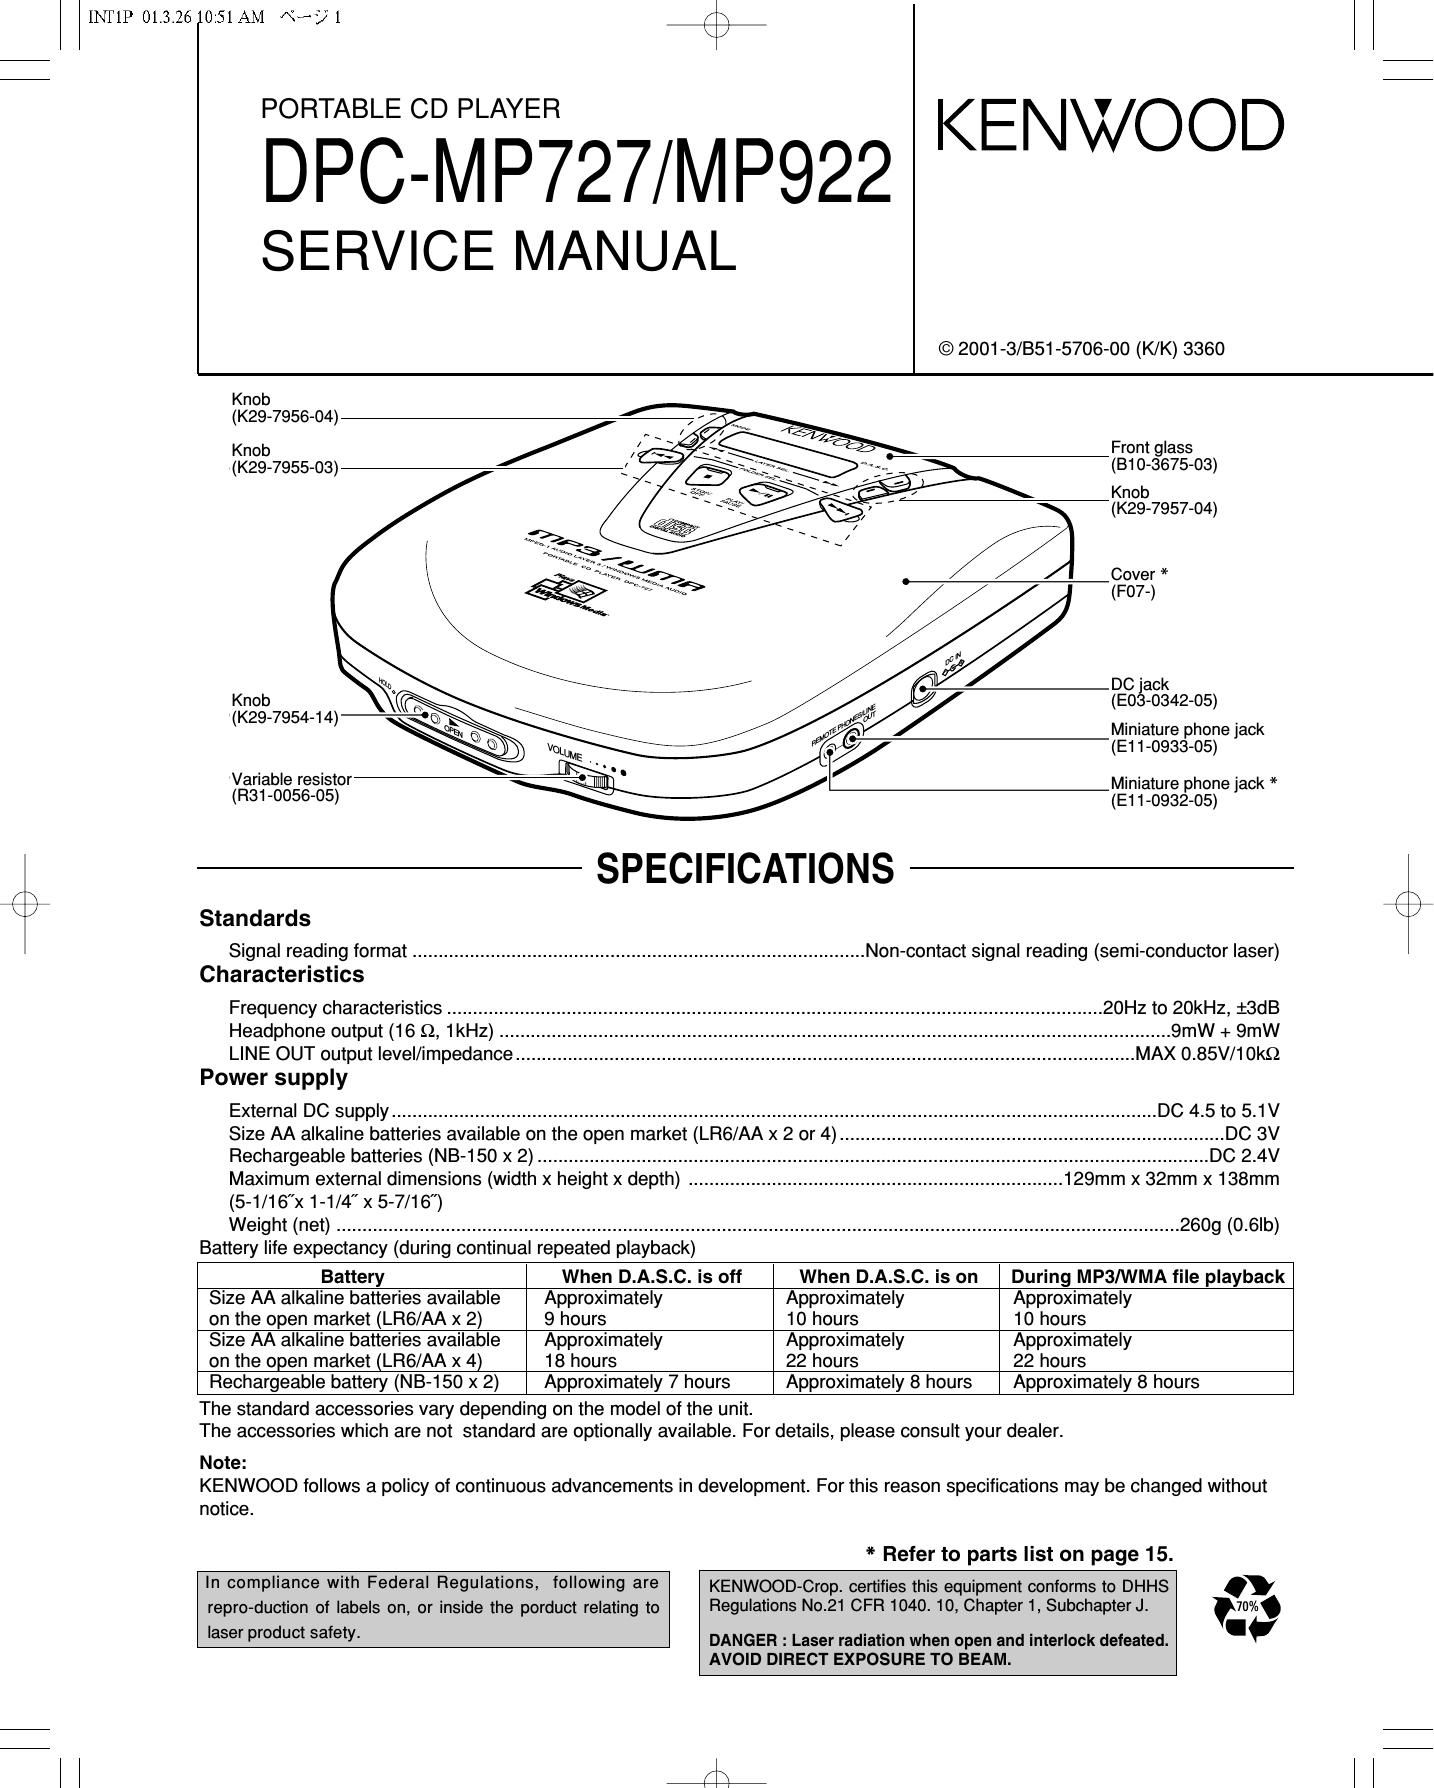 Kenwood DPCMP 727 Service Manual